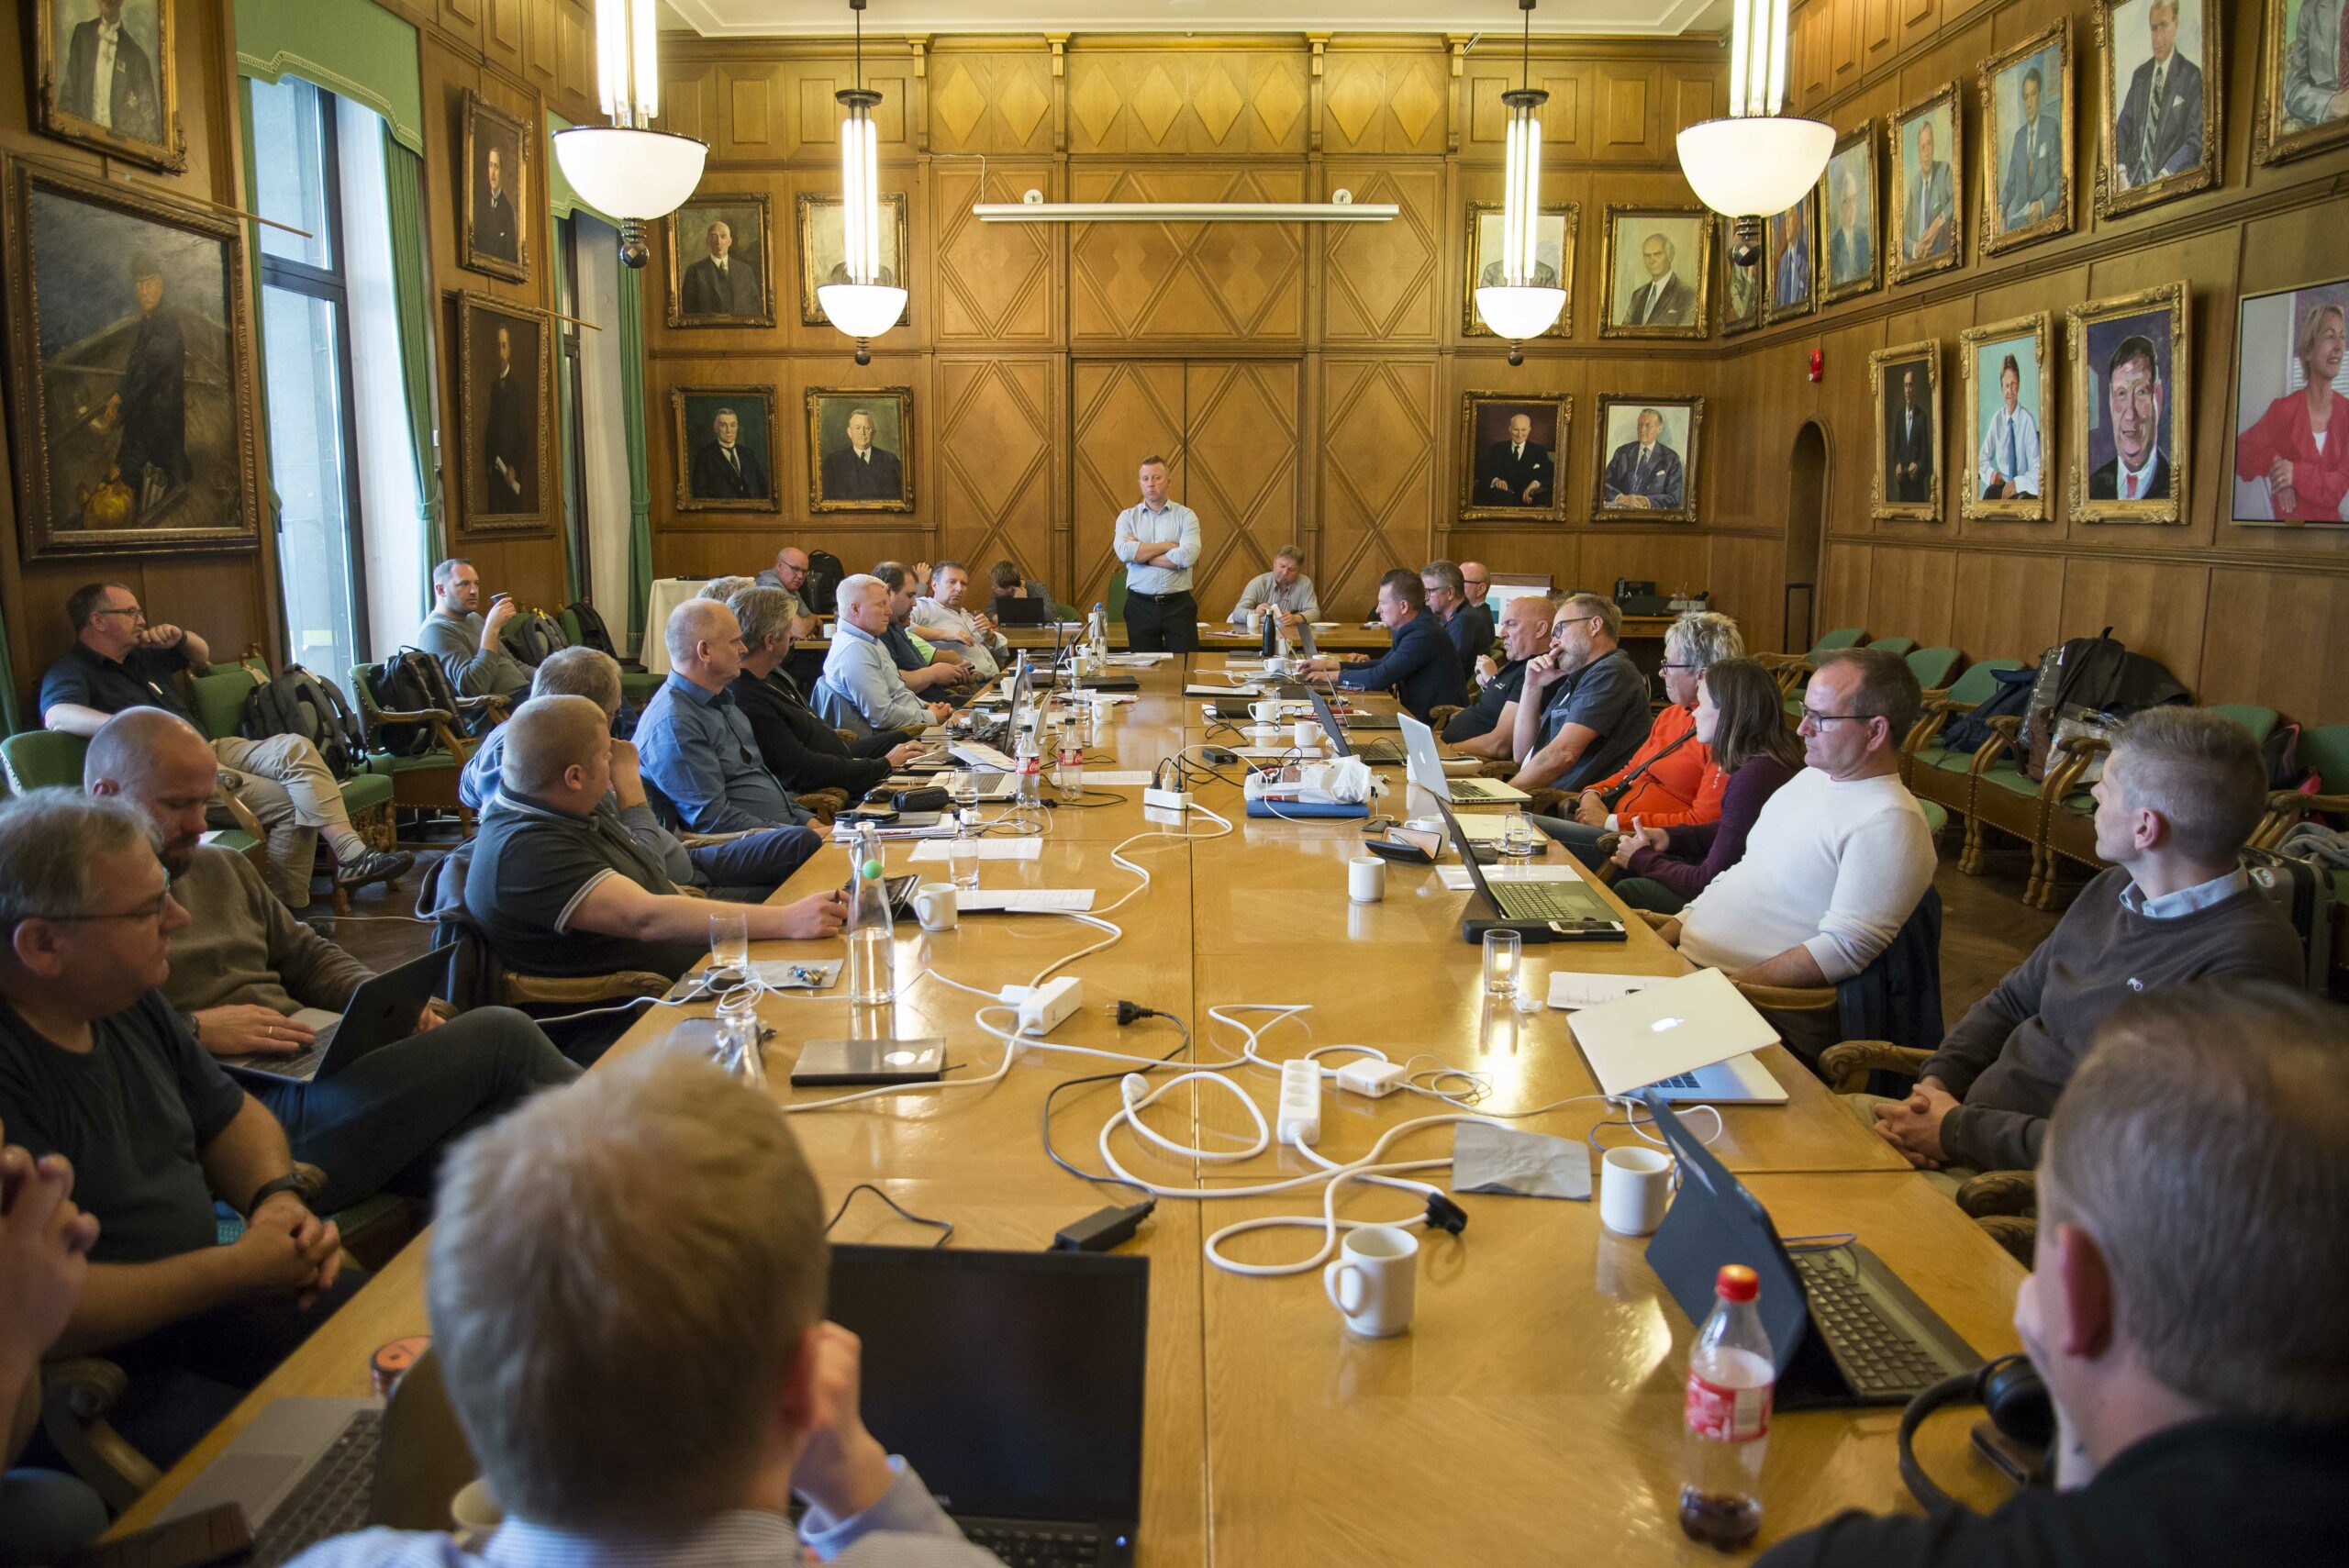 Industri Energis forhandlingsutvalg har i to dager forhandlet med NR i Rederiforbundets lokaler i Oslo. Foto: Atle Espen Helgesen